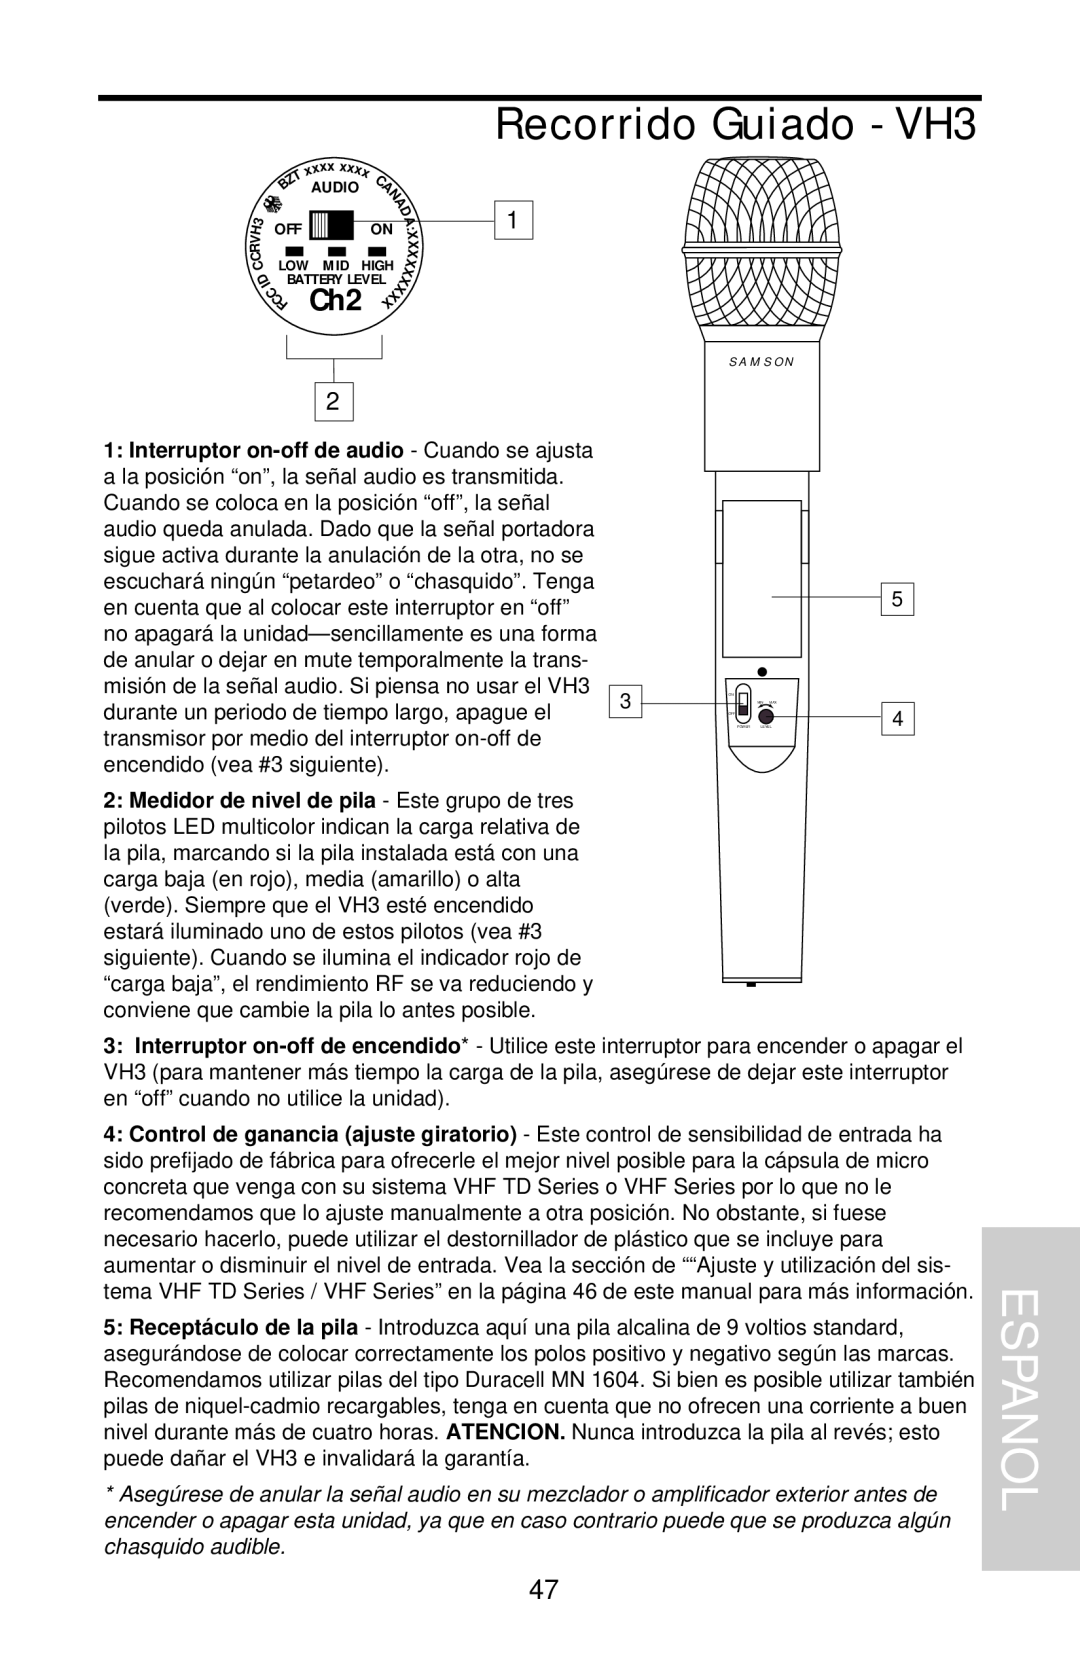 Samson VHF Series, VHF TD Series owner manual Recorrido Guiado - VH3, Espanol 